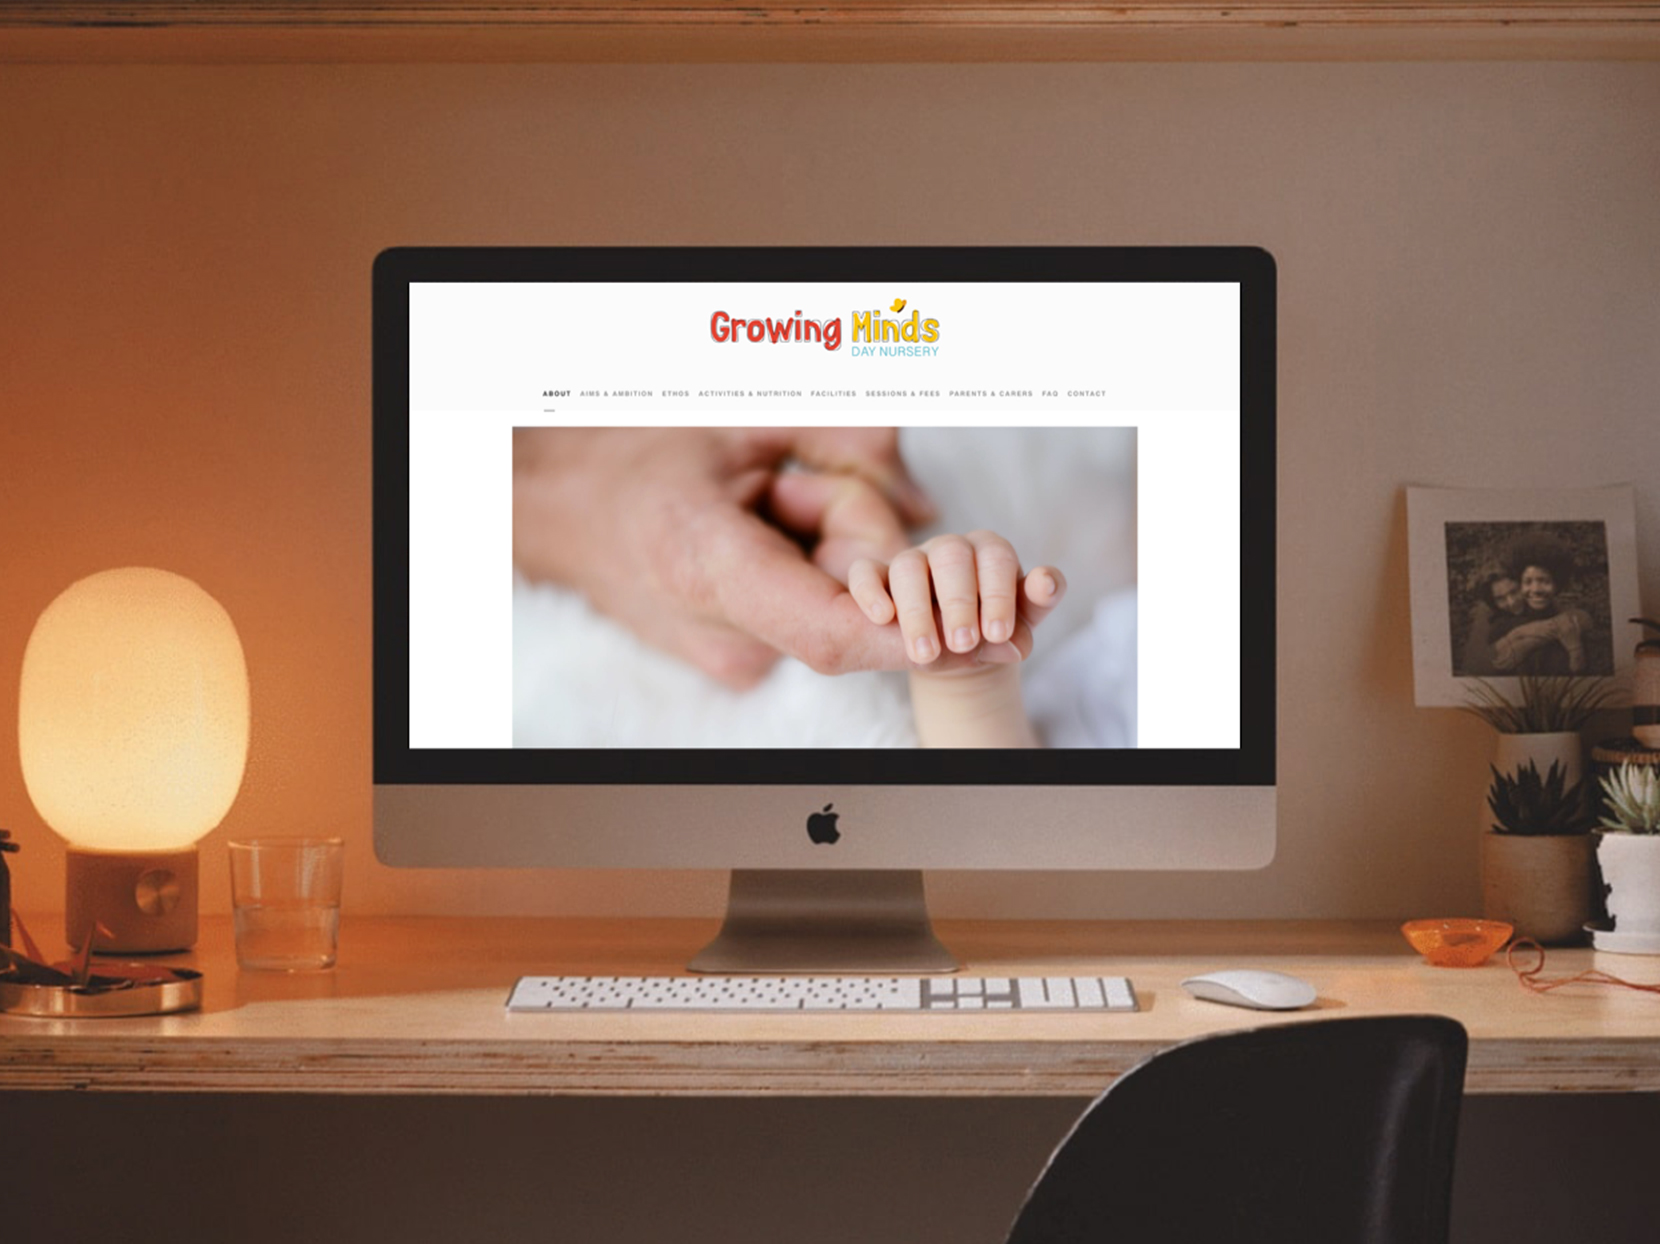 iMac computer shows Growing Minds website design